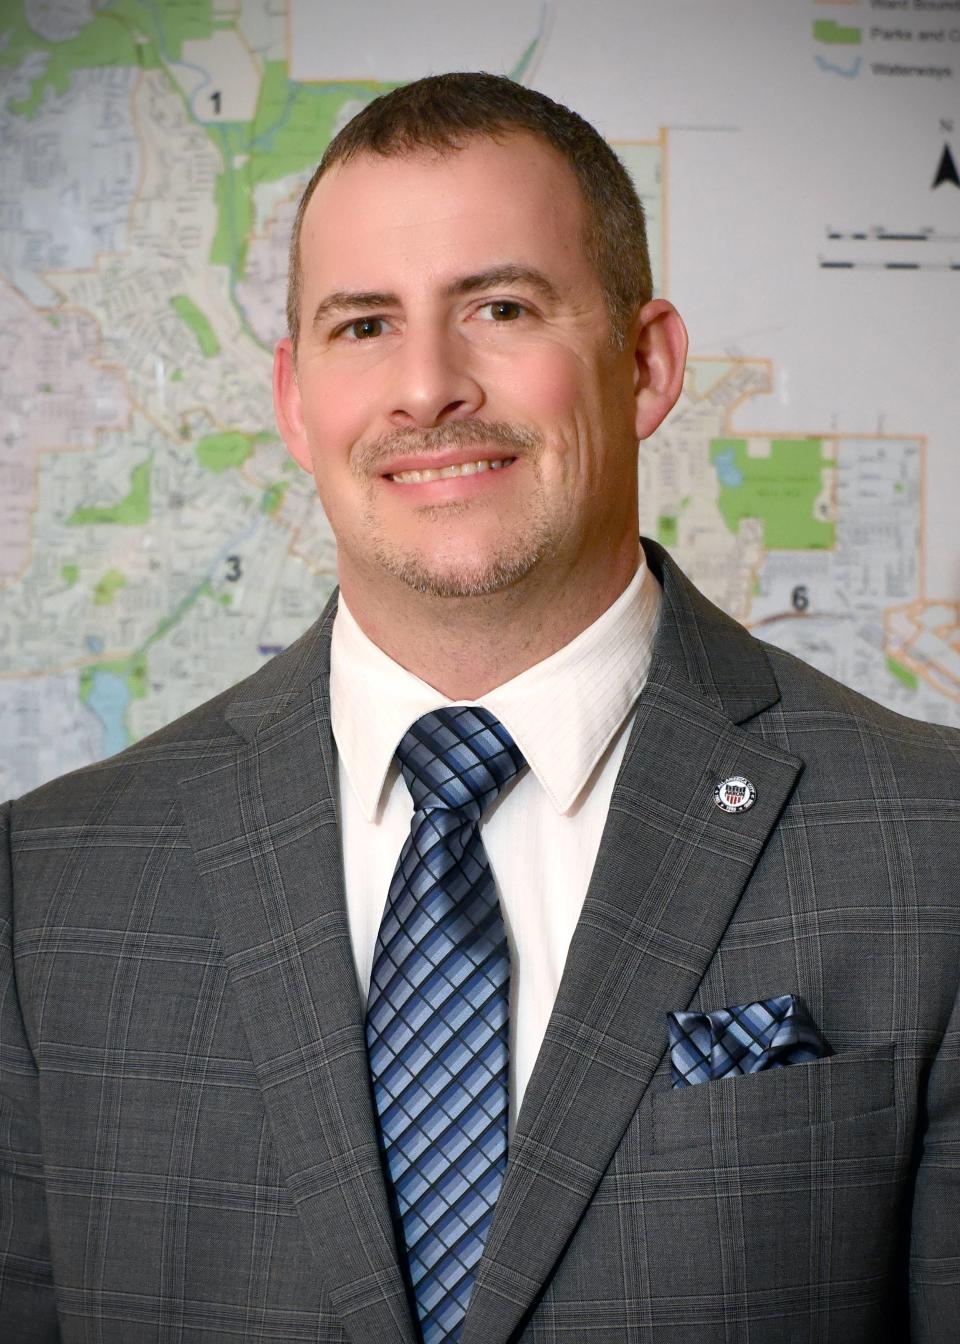 Donnie Kammer, Akron Ward 7 councilman